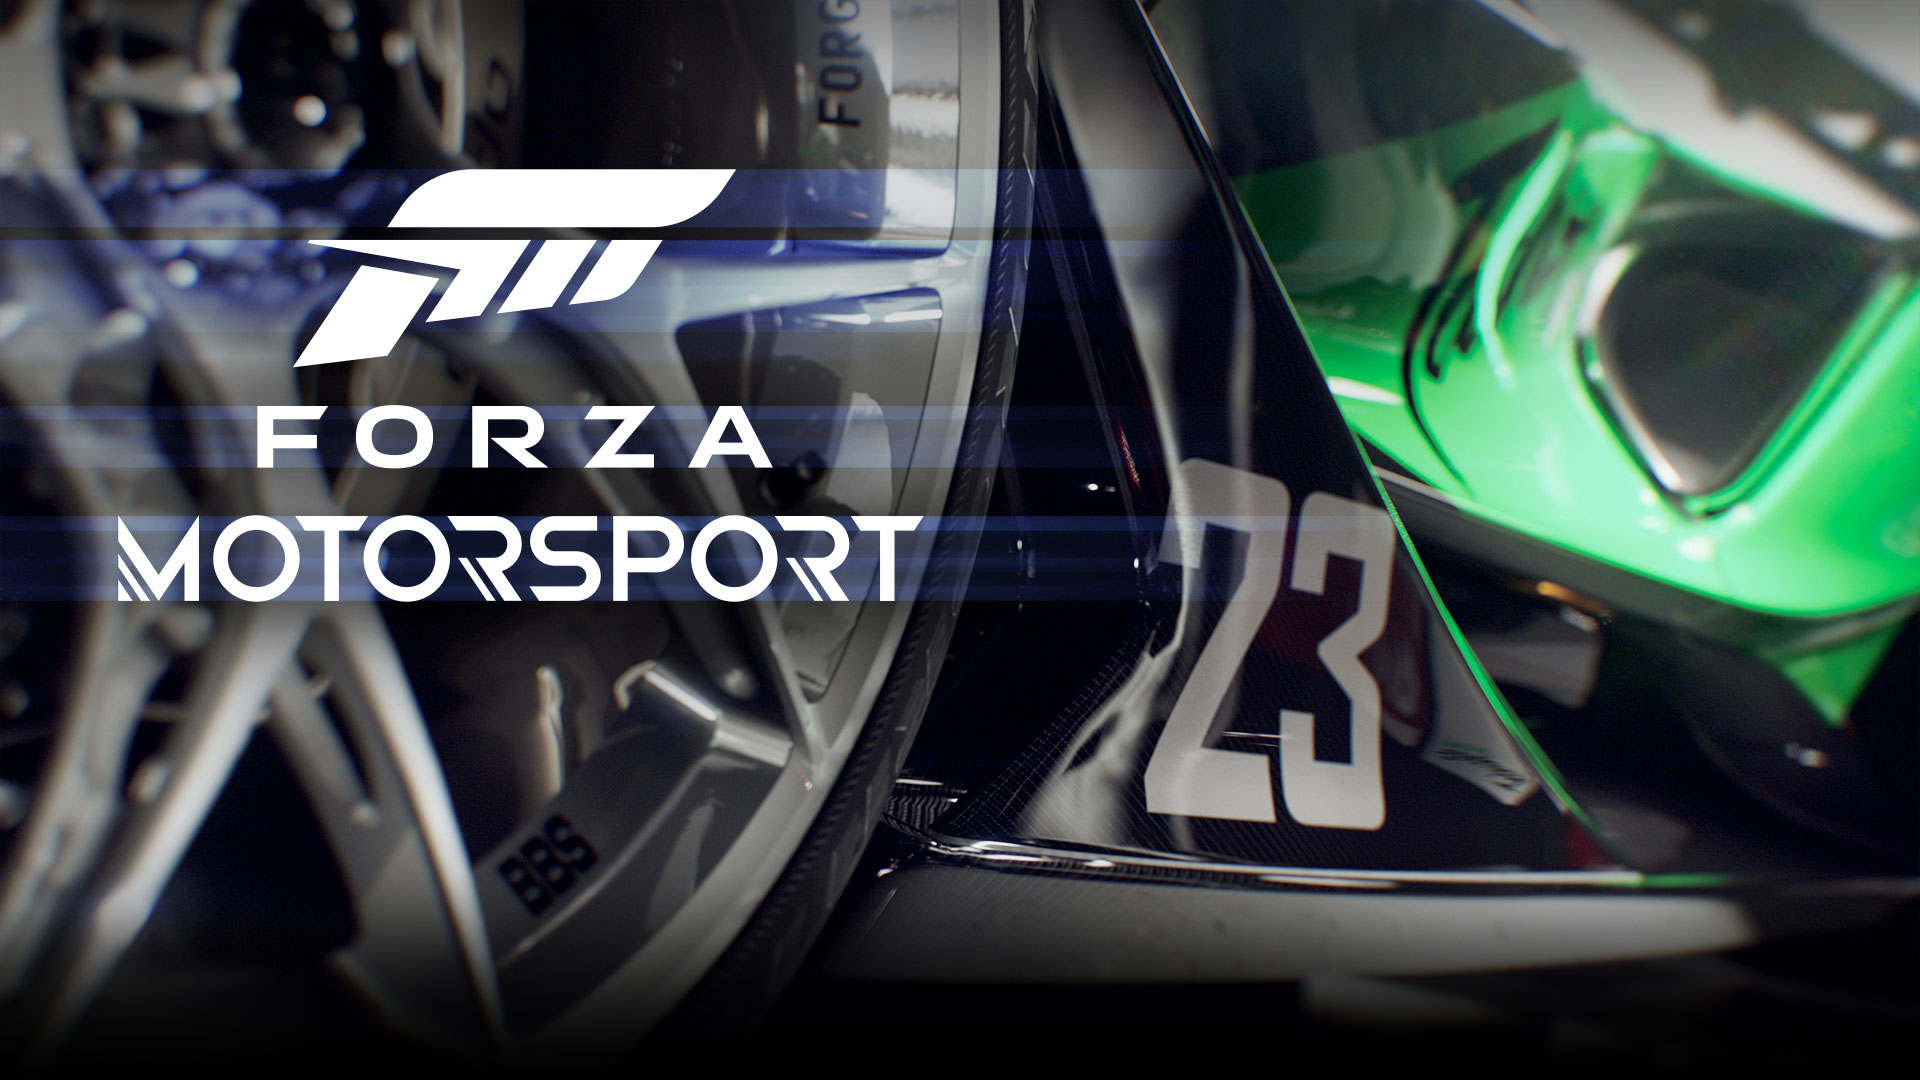 Próximo Forza Motorsport deve chegar somente em 2023, afirma Tom Henderson